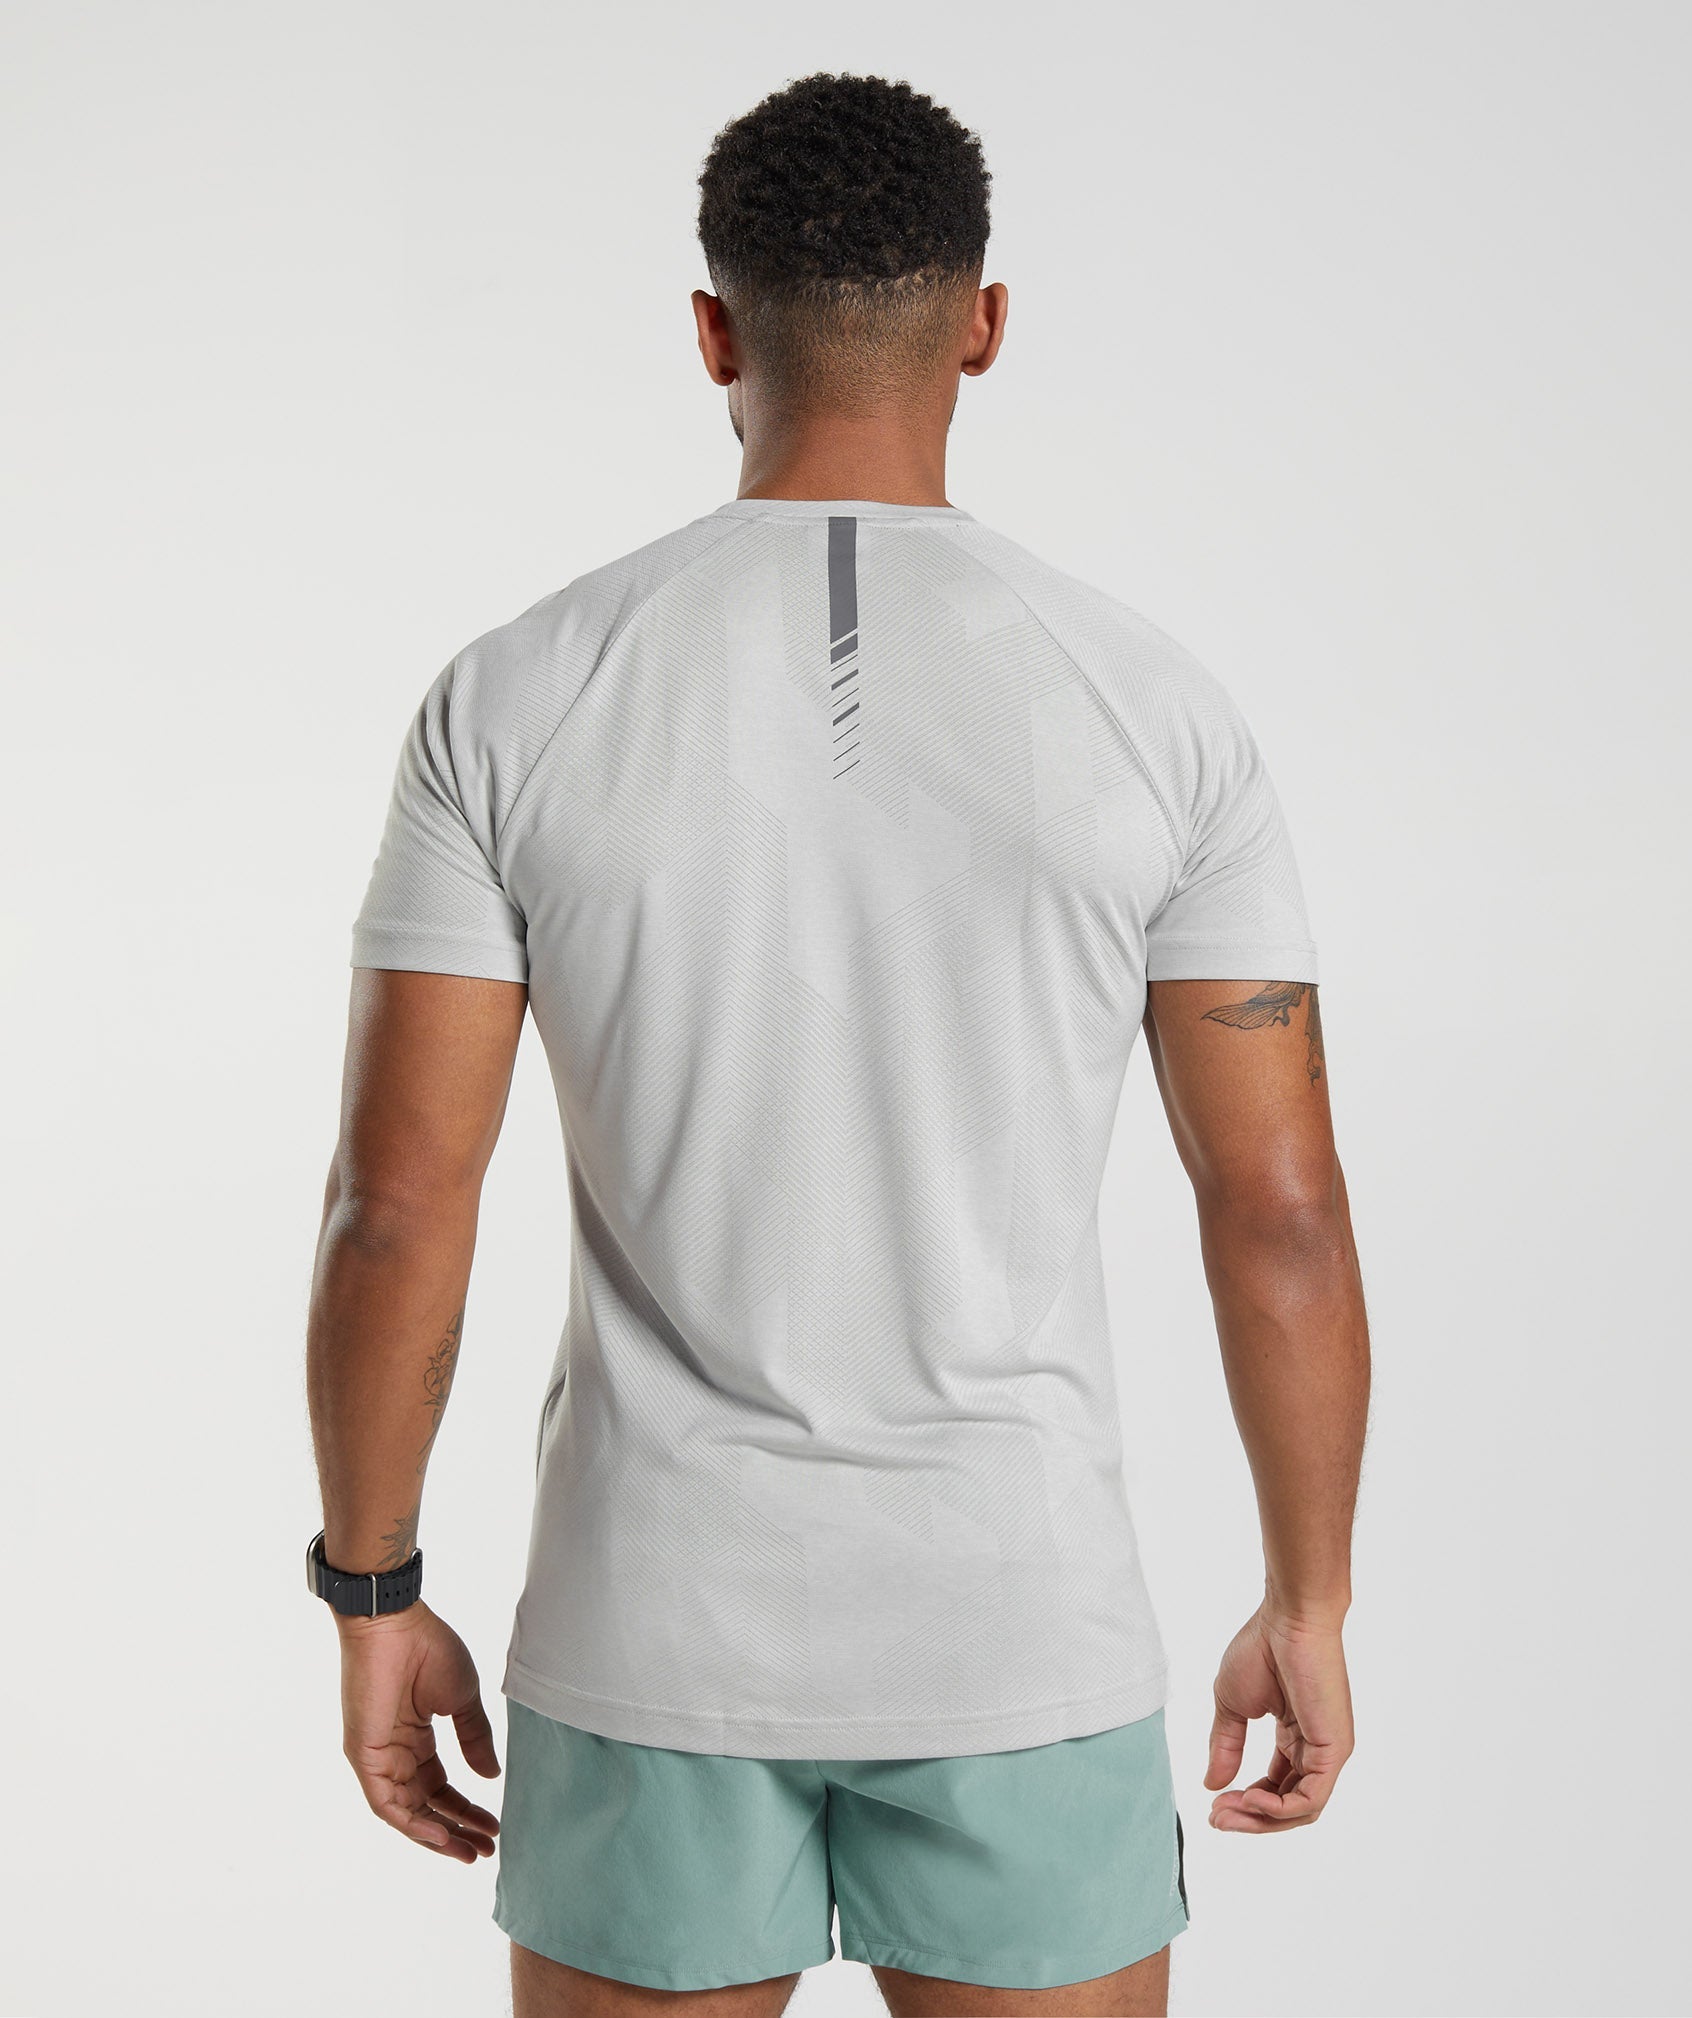 Apex T-Shirt in Light Grey/Smokey Grey - view 2